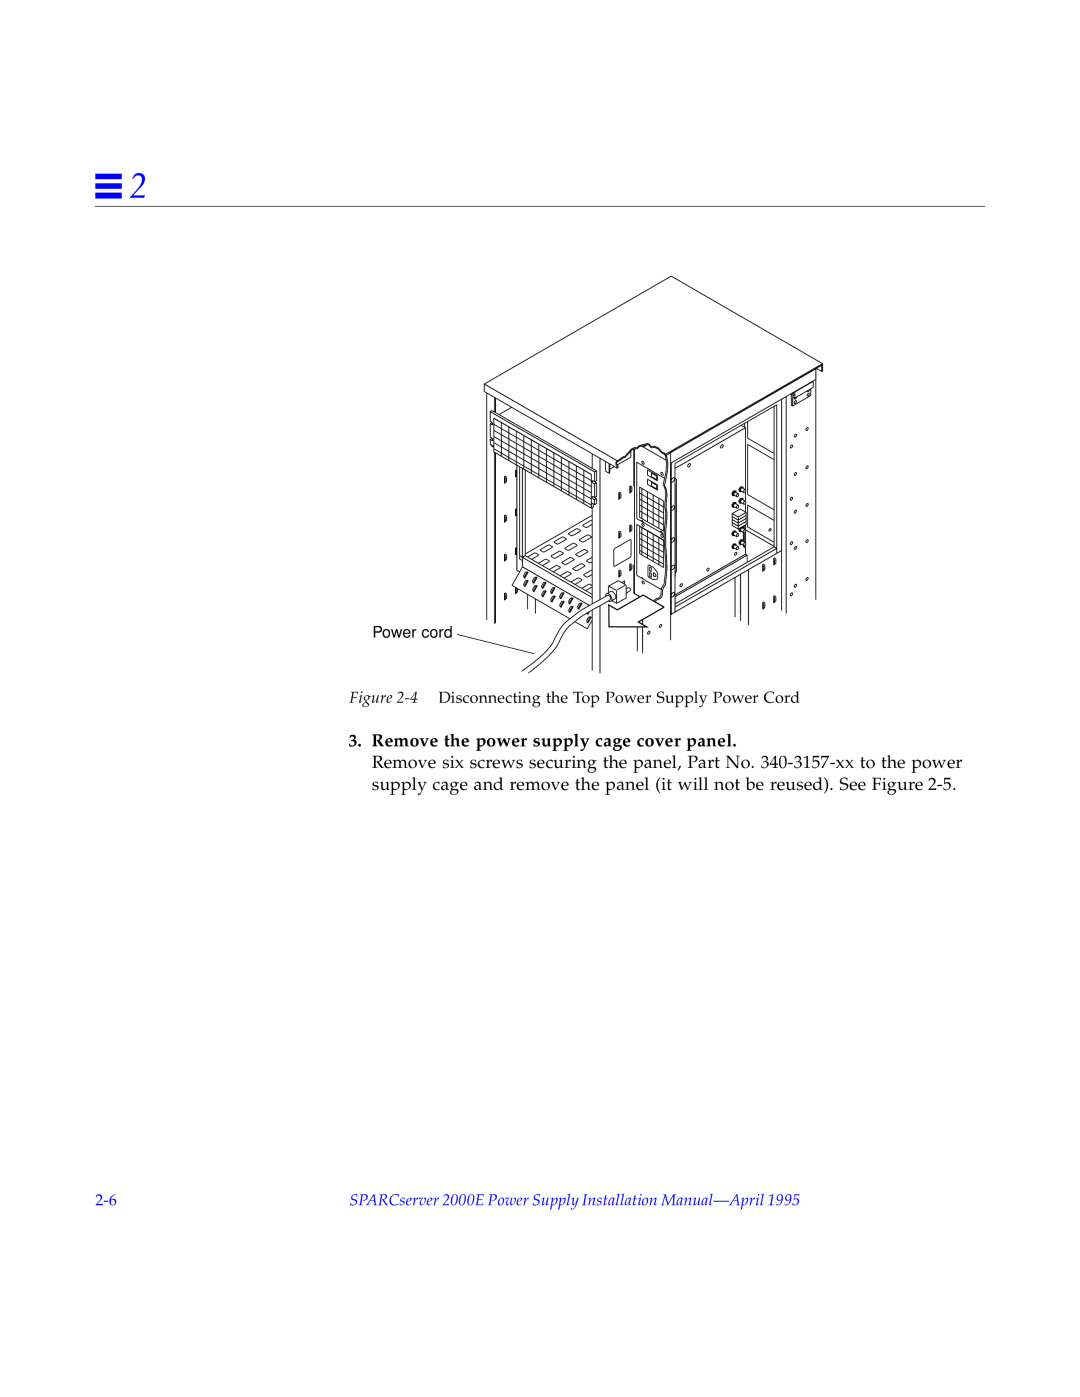 Sun Microsystems 2000E installation manual Remove the power supply cage cover panel, Power cord 